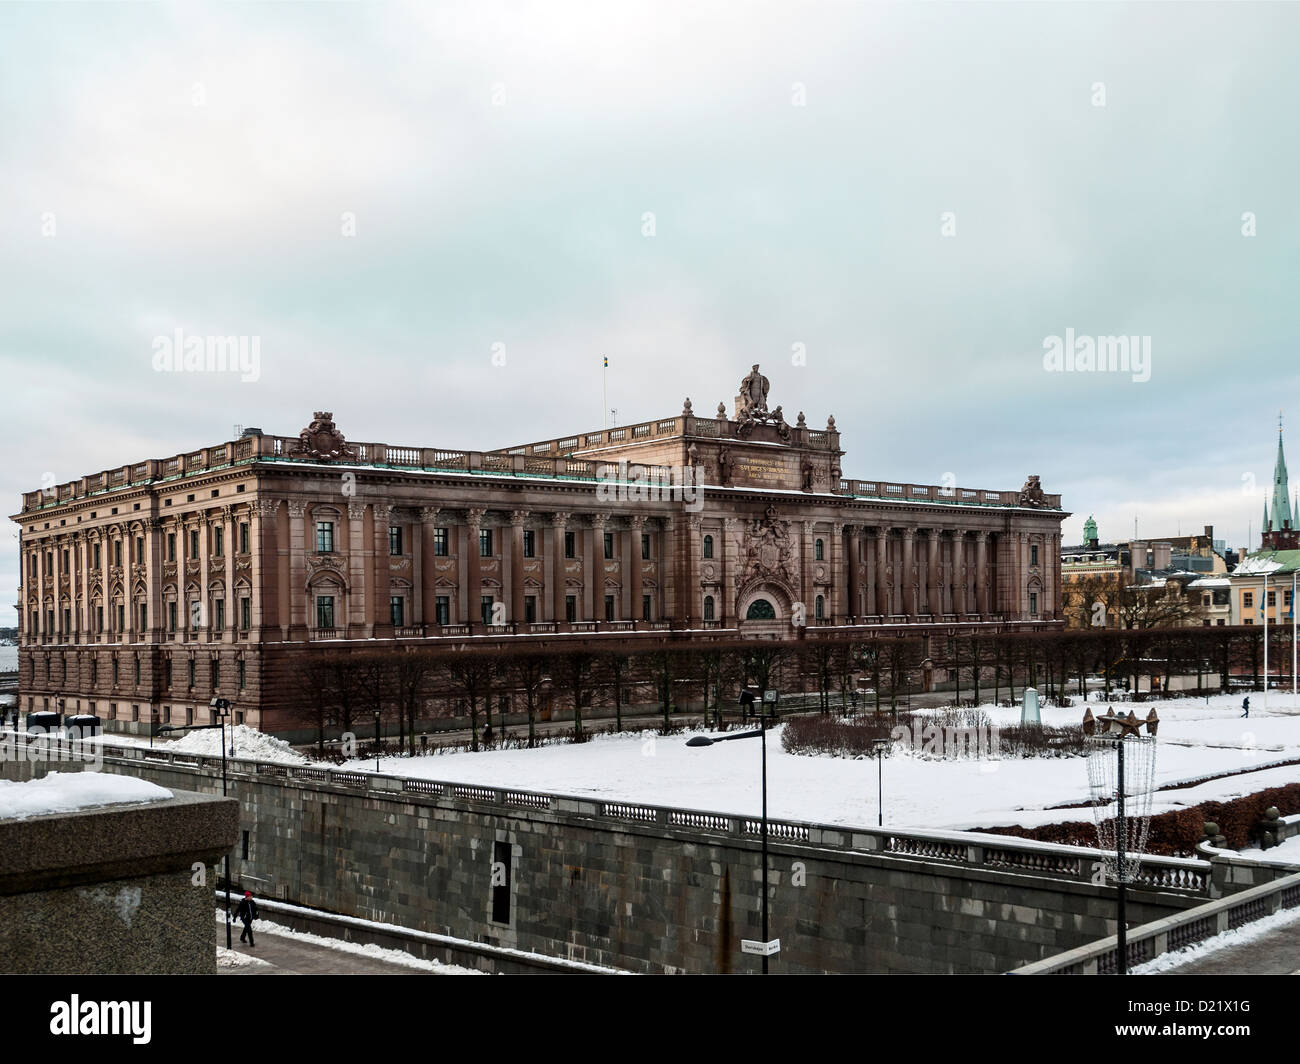 Swedish Parliament building - Riksdag - in winter, Gamla stan (old town) Stockholm, Sweden Stock Photo